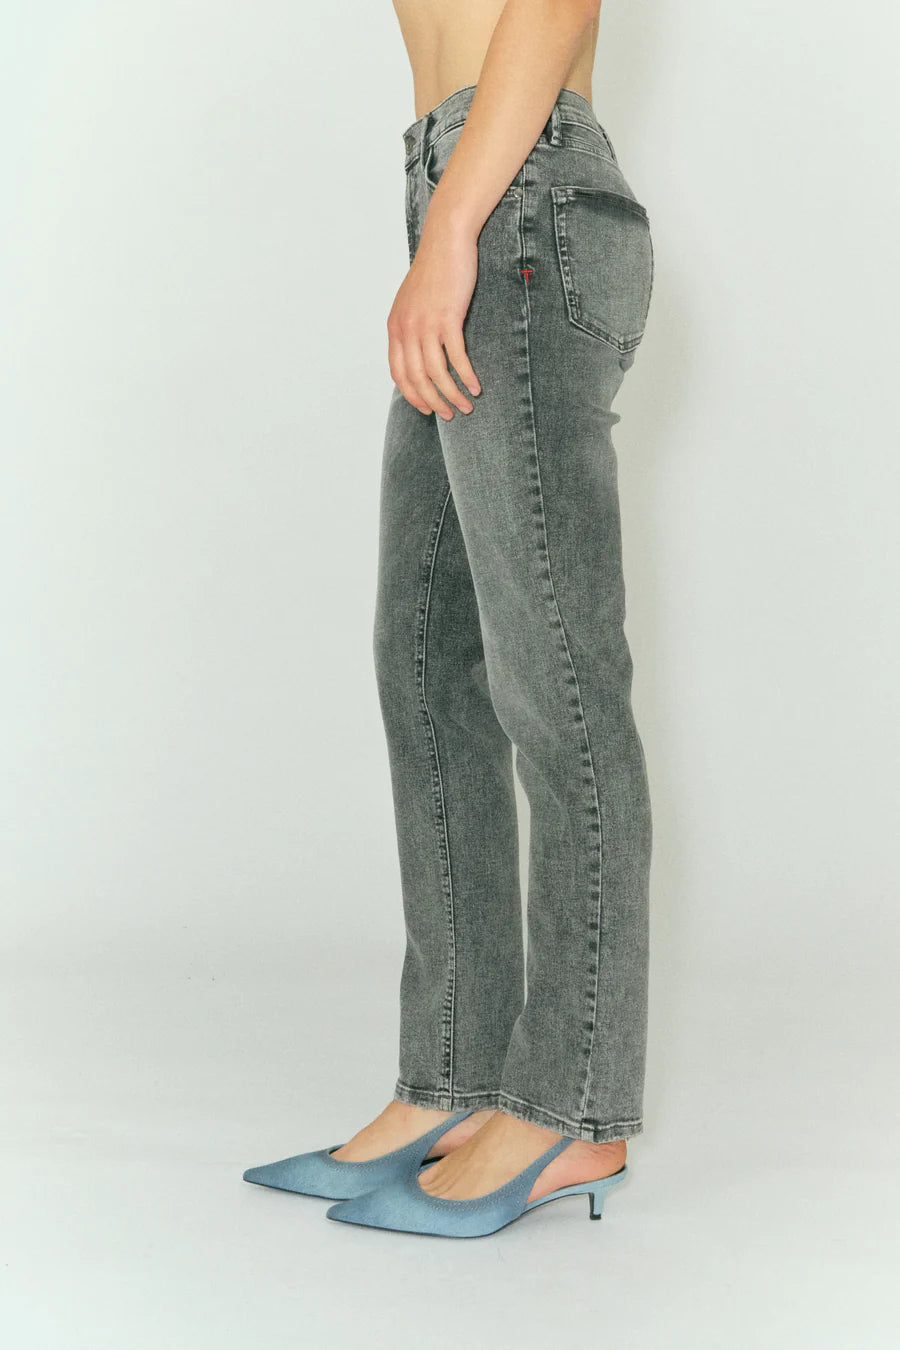 A woman wearing Tomorrow Denim's Teresa Jeans - Vintage Grey Used and blue heels.